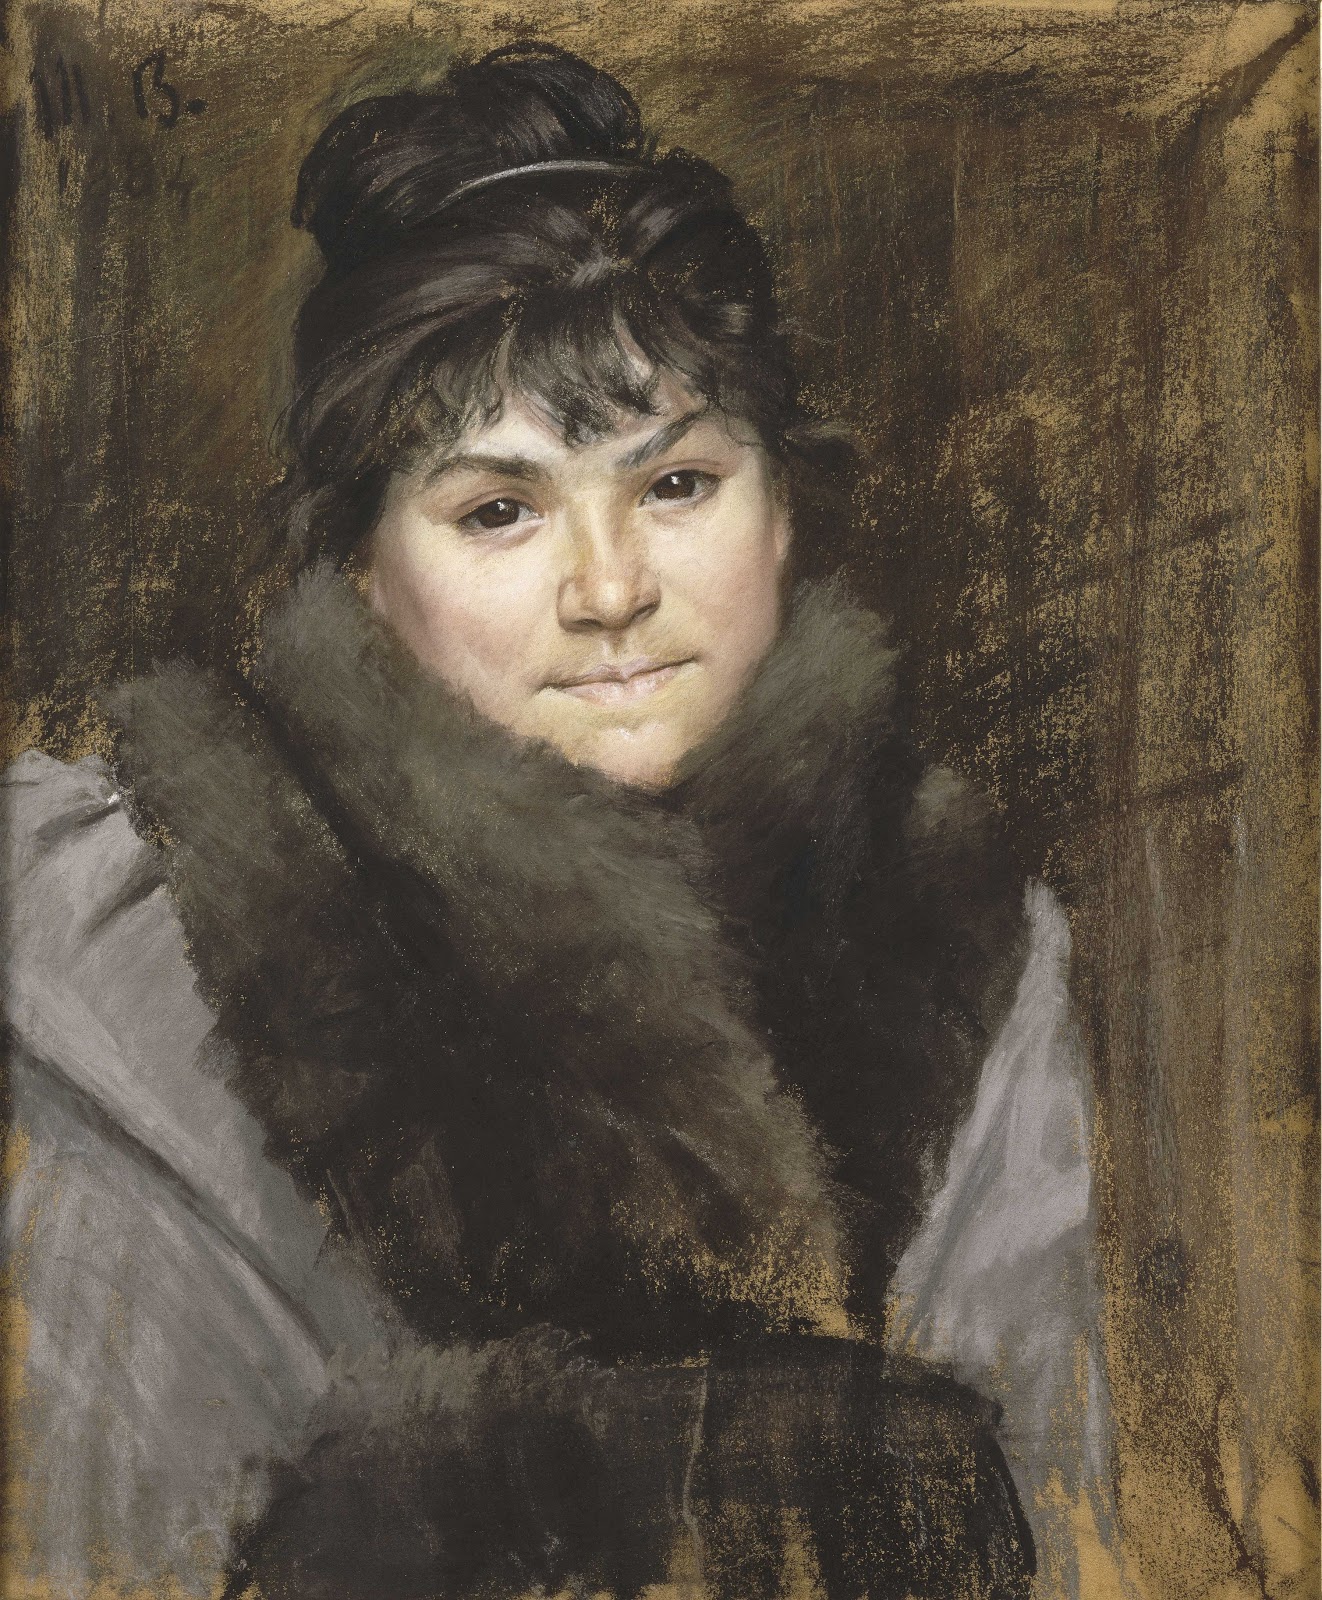 Marie+Bashkirtseff-1858-1884 (13).jpg